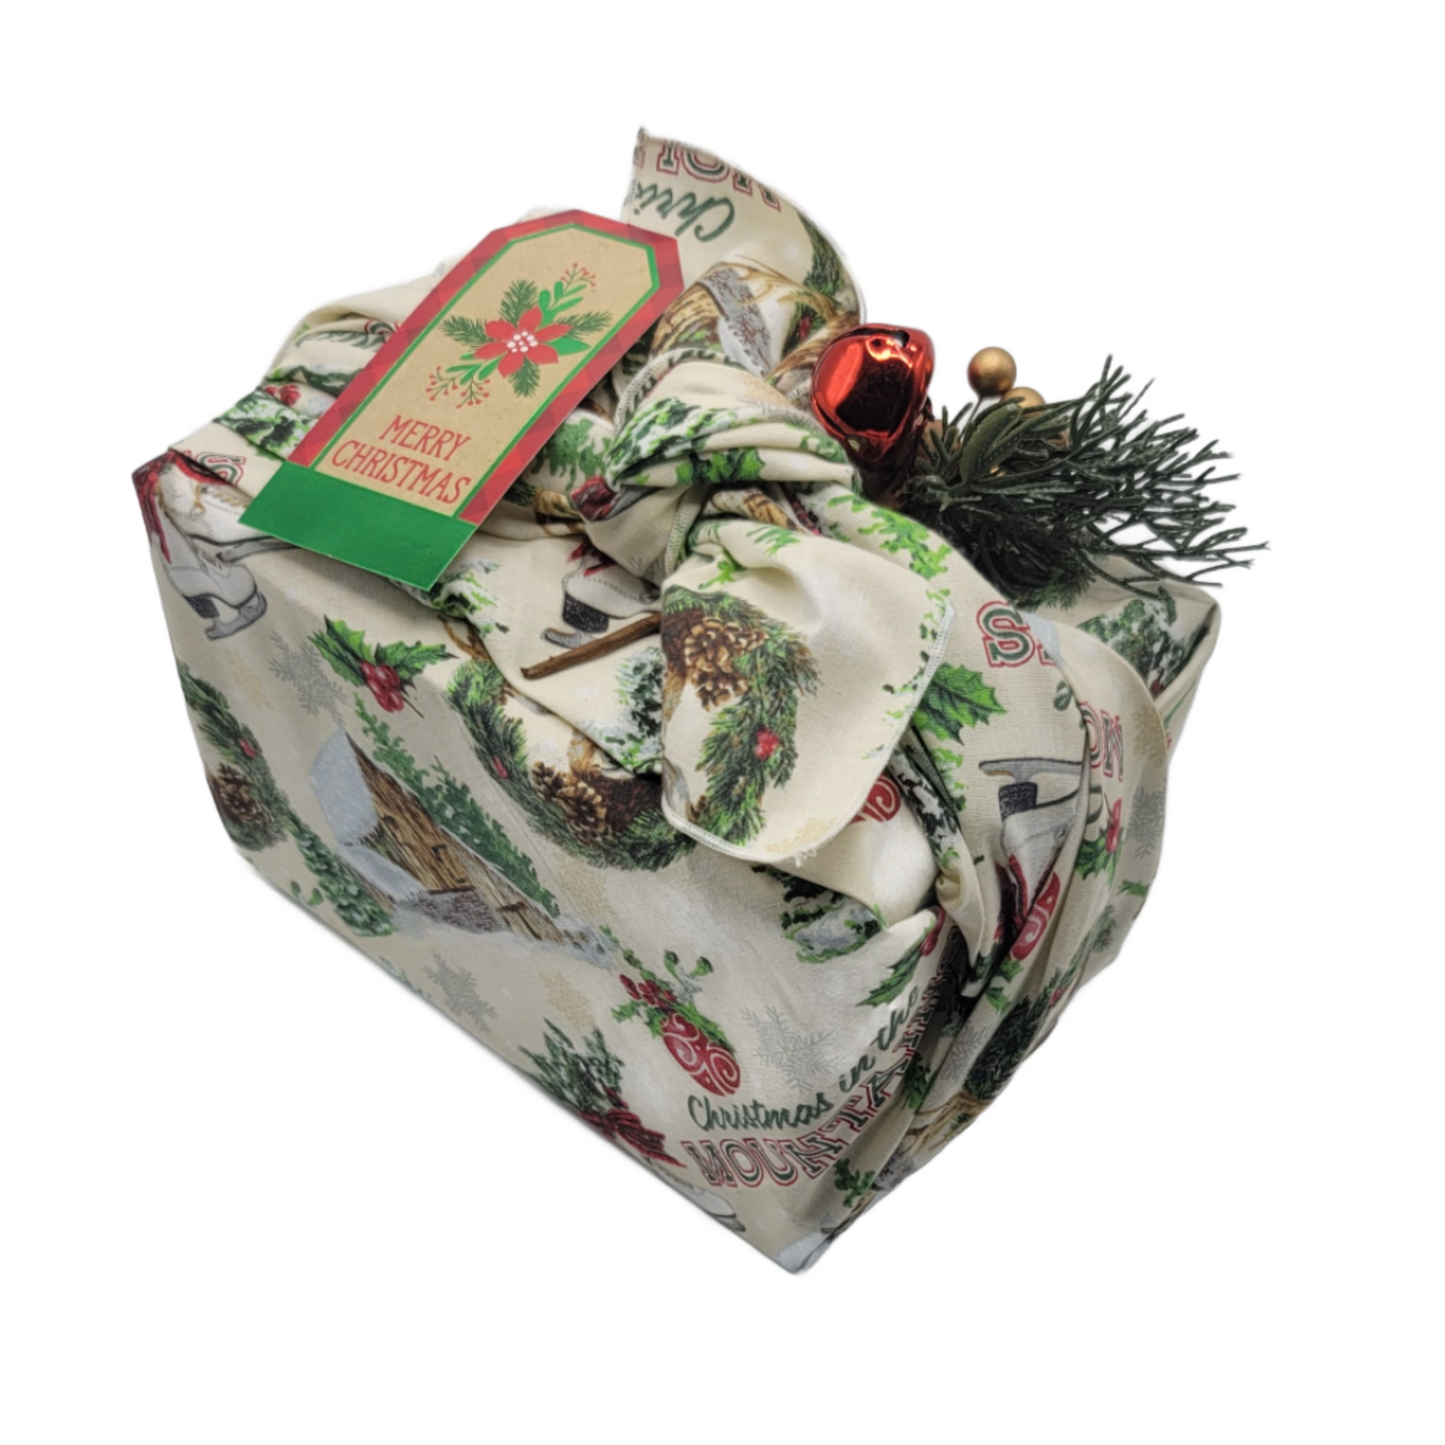 Furoshiki 3 pc Fabric Gift Wrap Kit - Holiday/Christmas in the Mountains